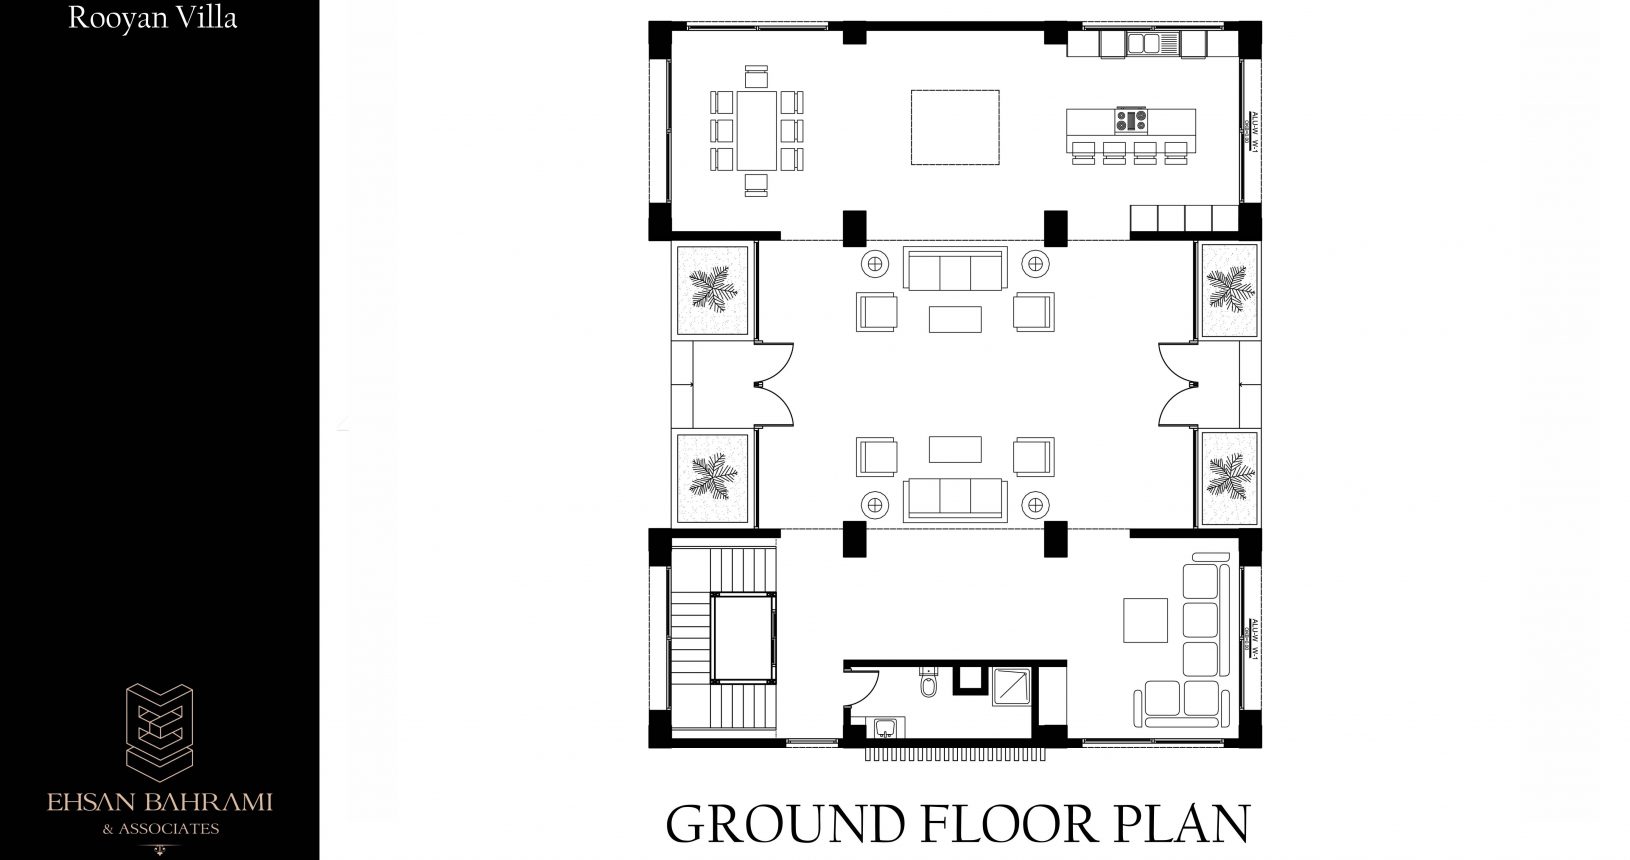 Royan Villa No.9 Ground Floor Plan